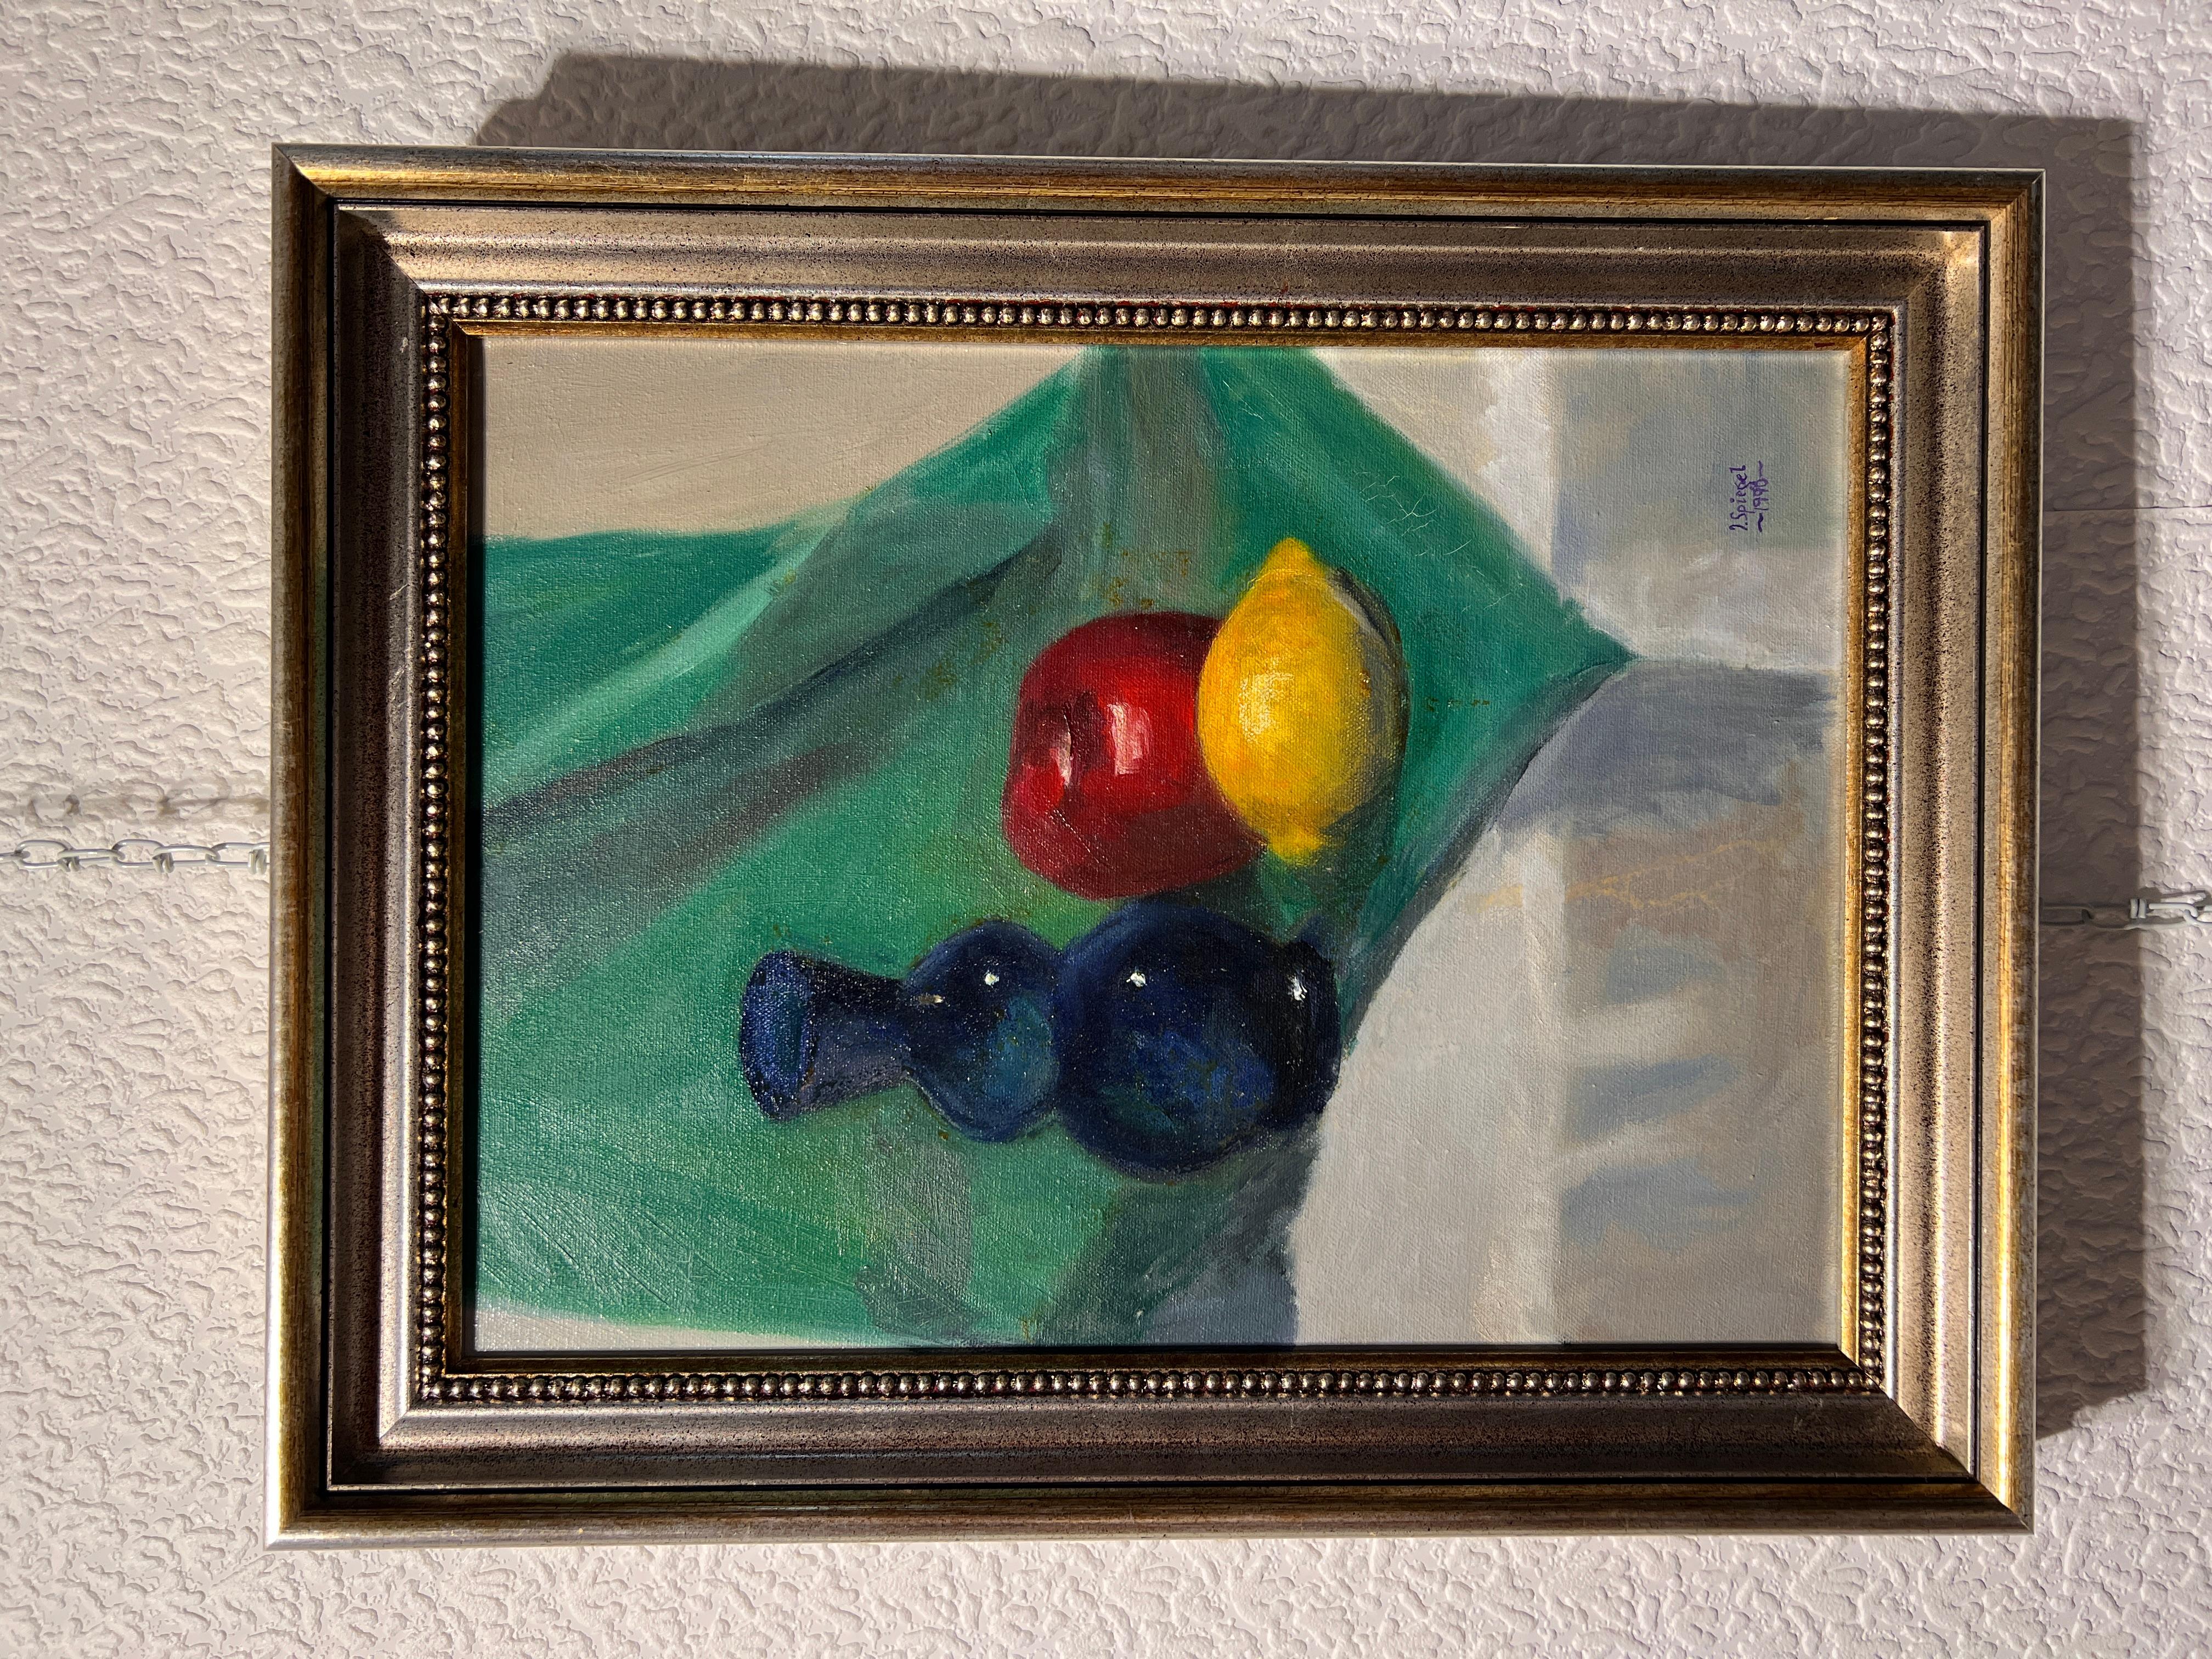 Vintage Oil Painting on Canvas Still Life, Fruits, Framed, Signed Spiesel 1998 For Sale 2